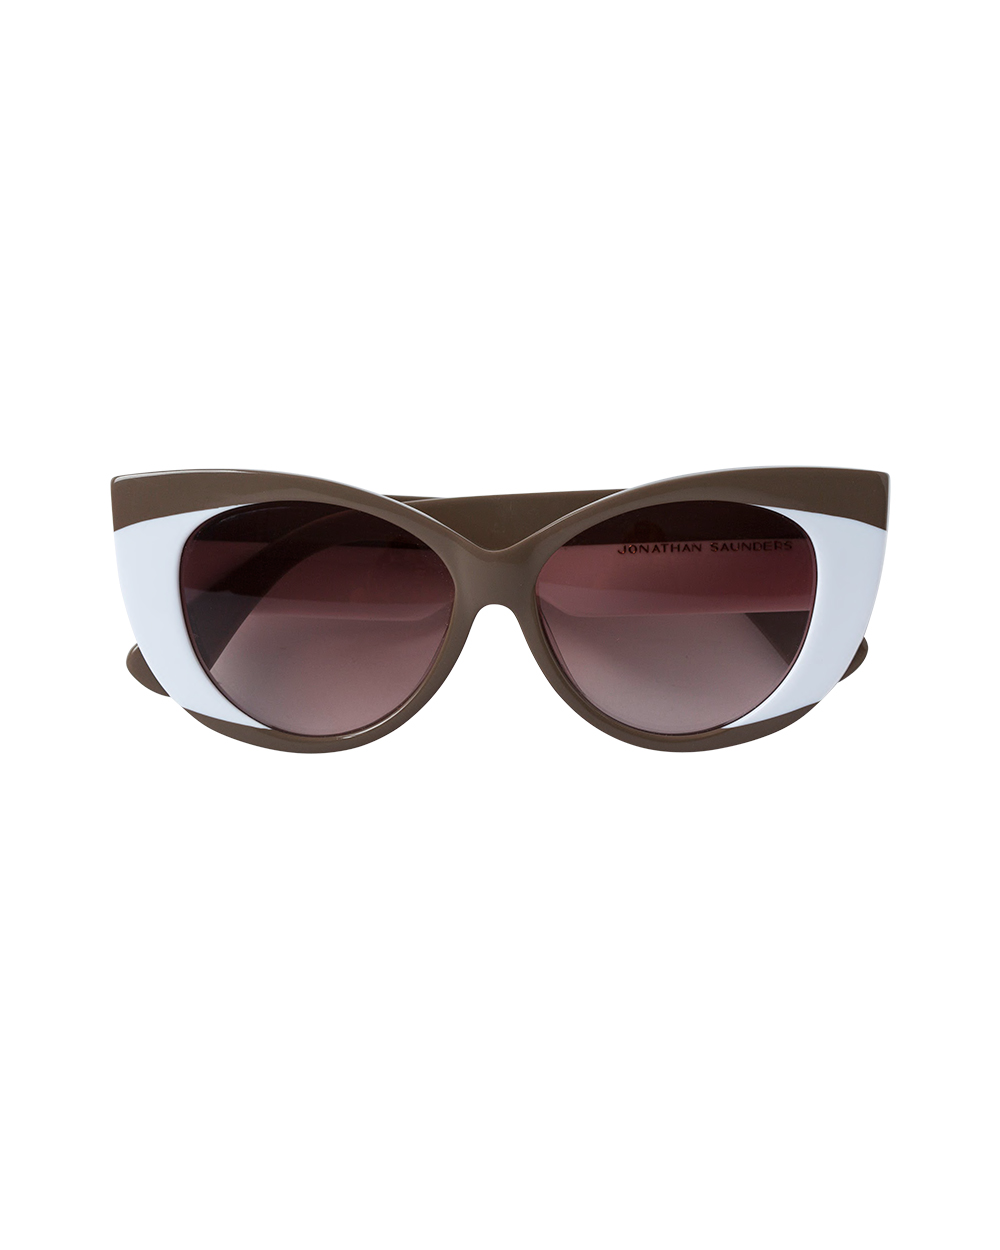 Jonathan Saunders sunglasses, $340